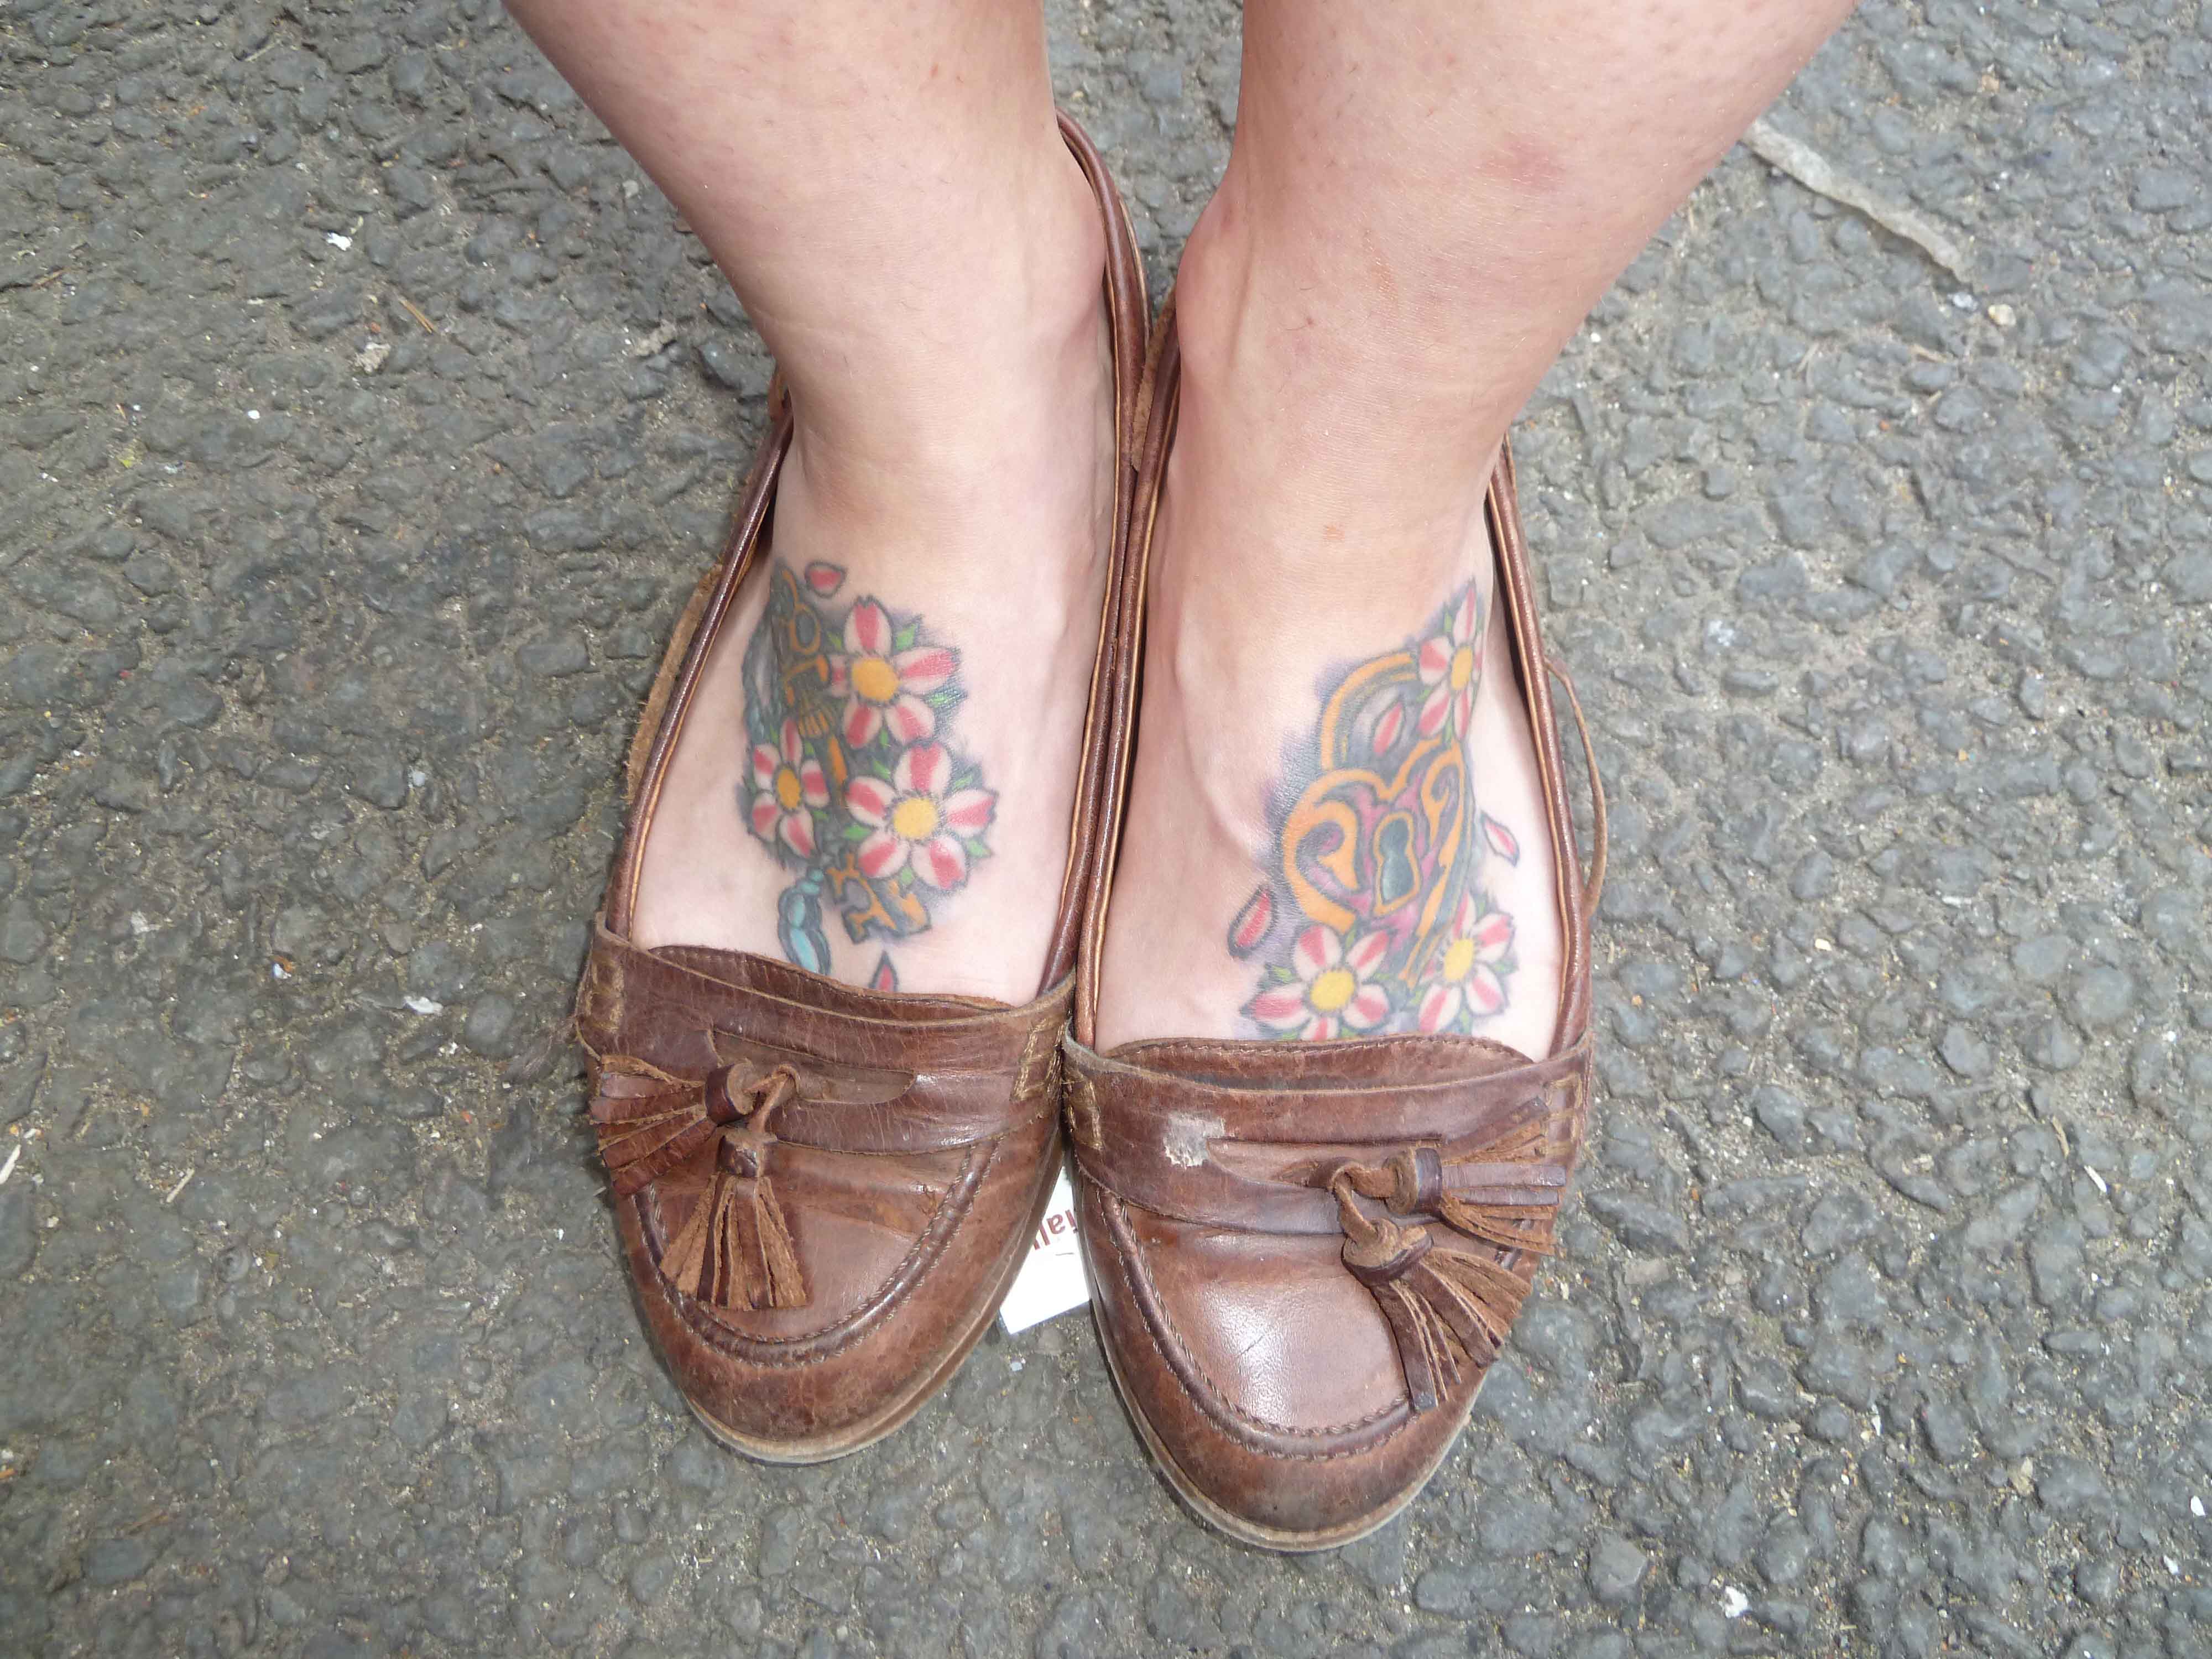 Lock With Flowers Tattoo On Feet